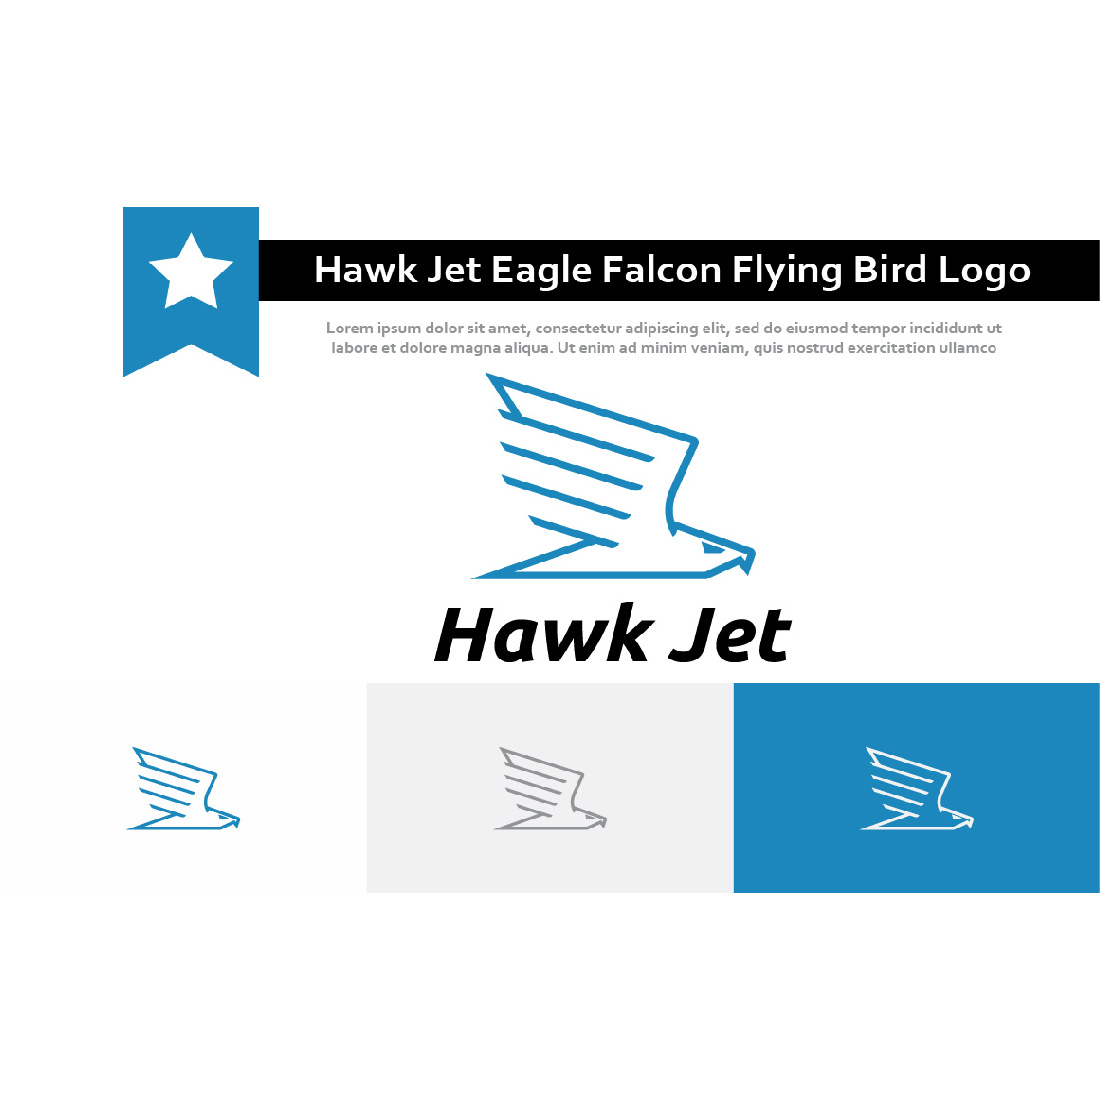 Fast Hawk Jet Eagle Falcon Flying Bird Monoline Logo Template cover image.